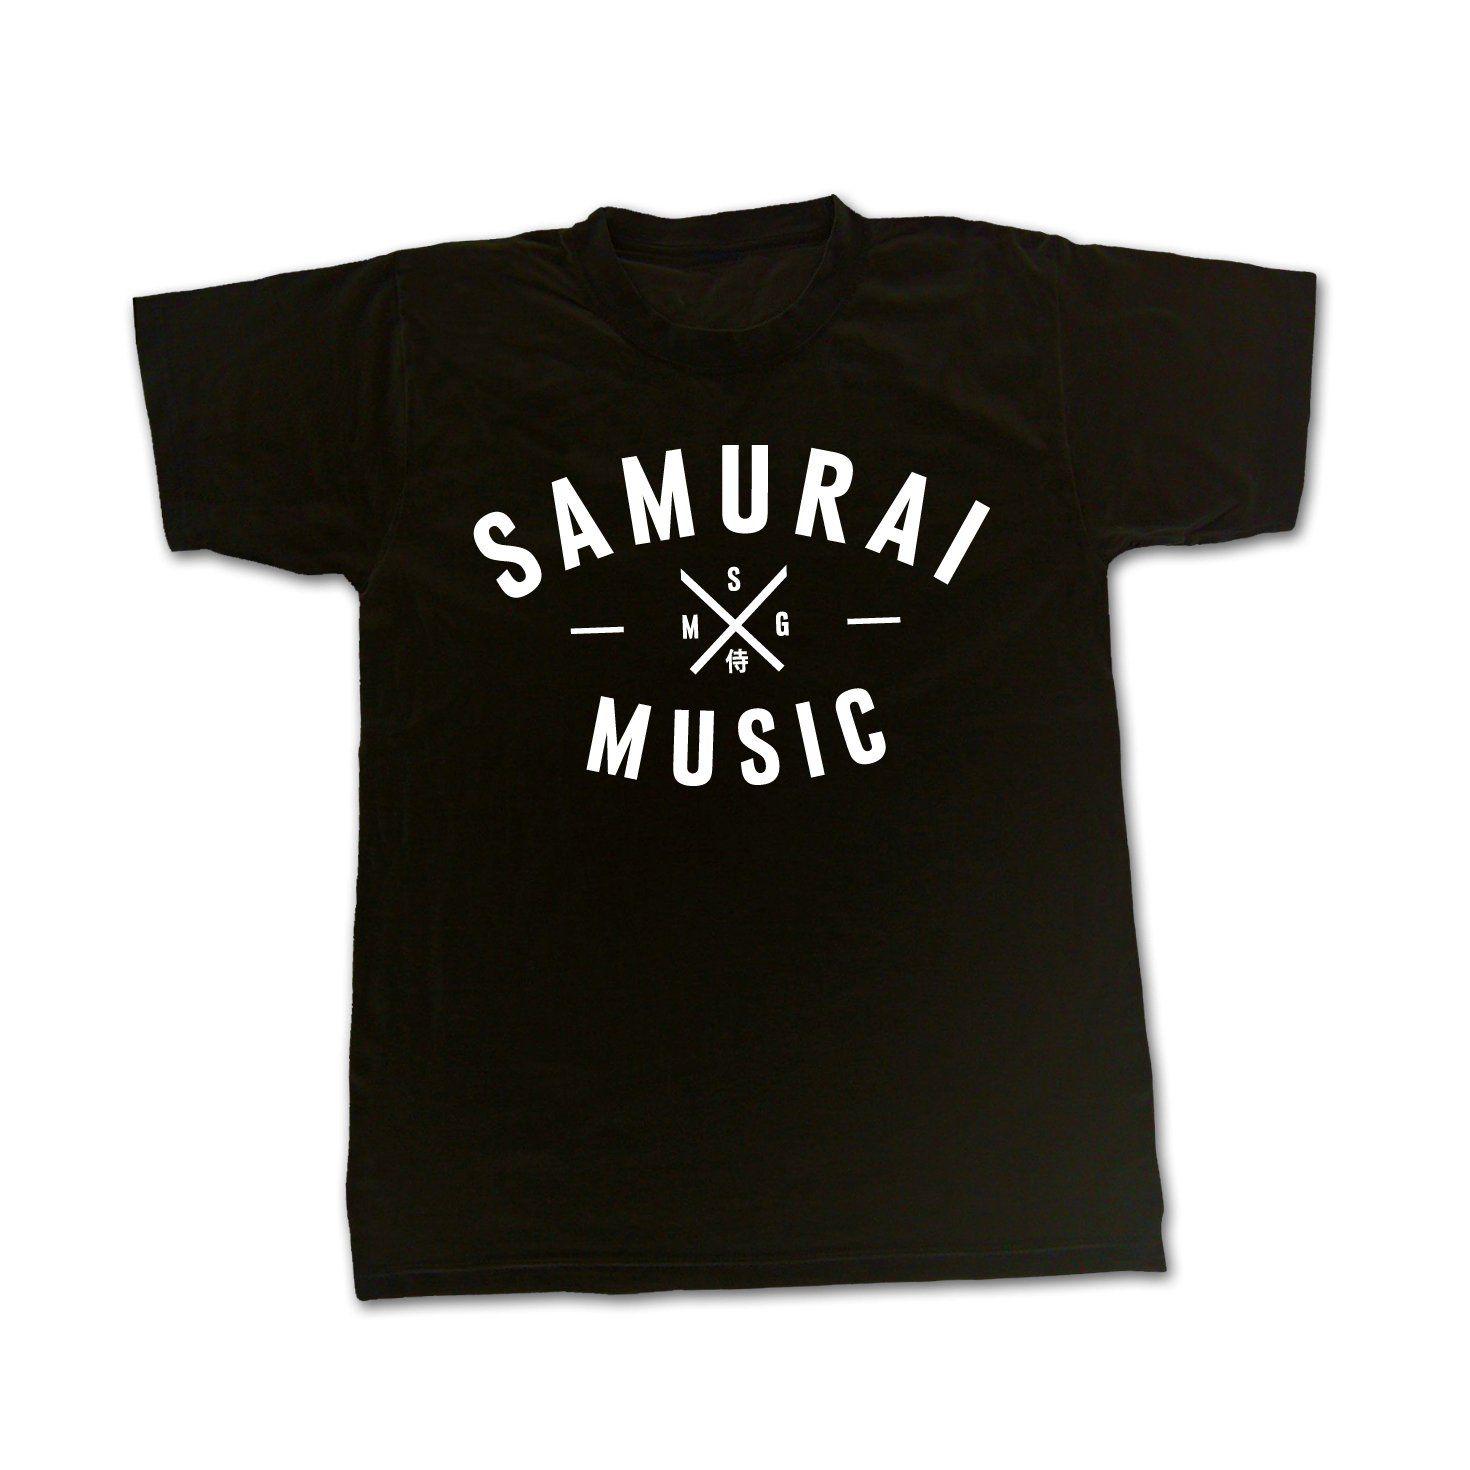 SMG Logo - Samurai Music - SMG Logo T Shirt - 2019 Limited Reprint